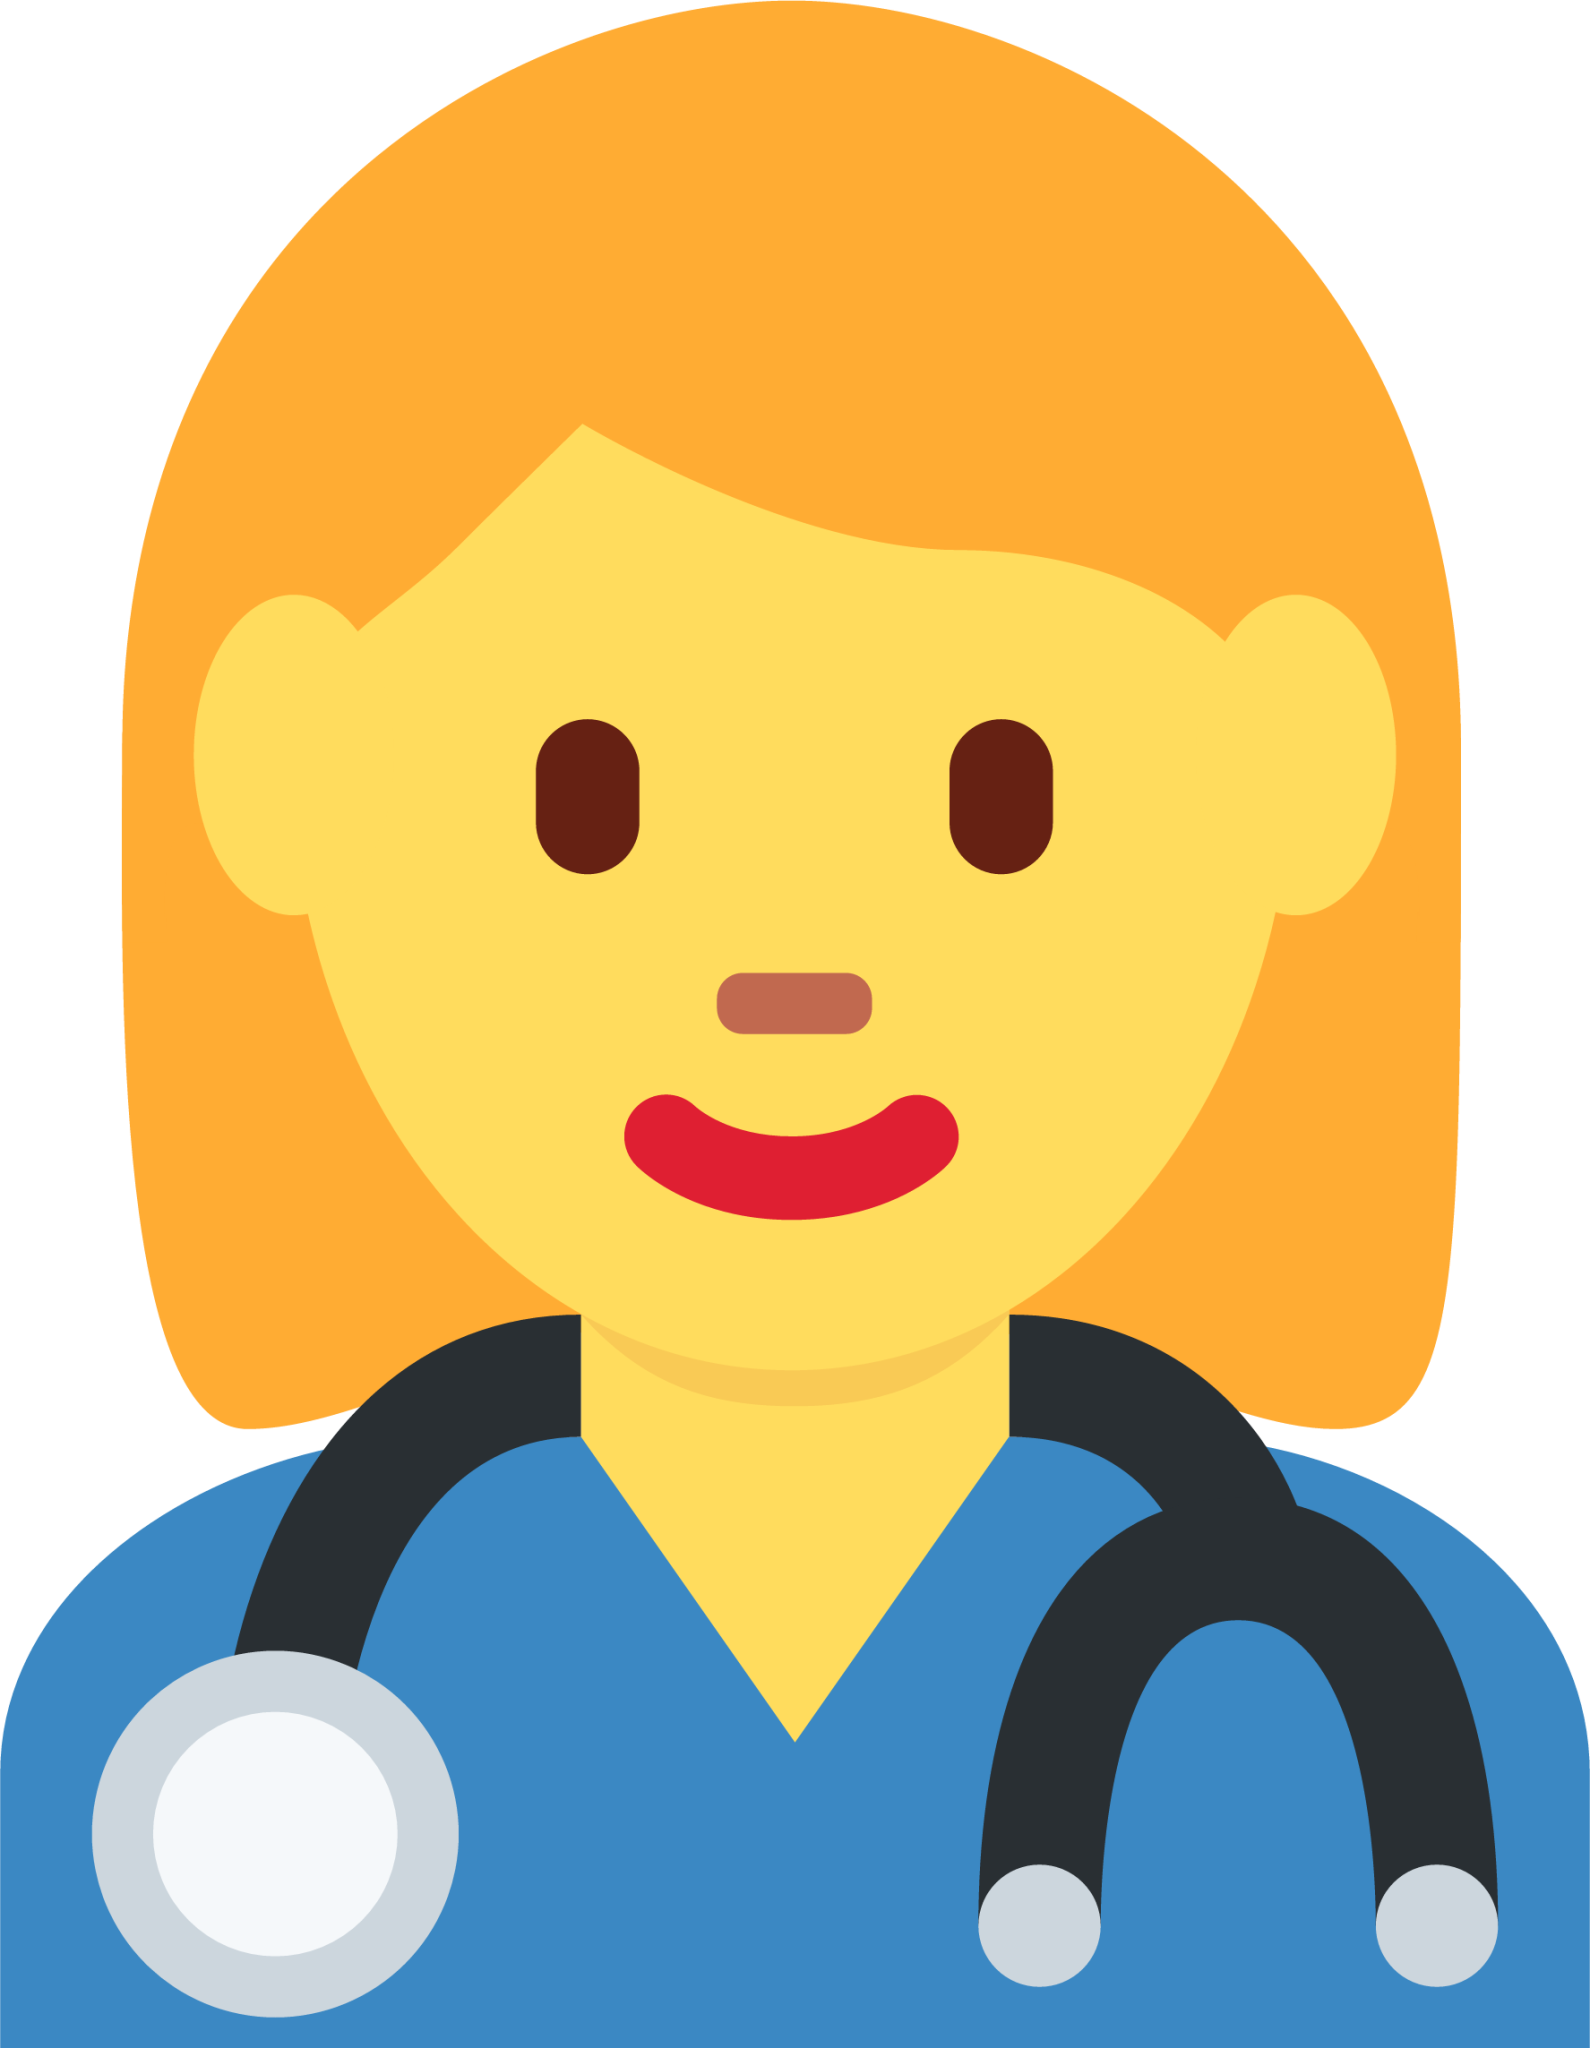 woman health worker emoji